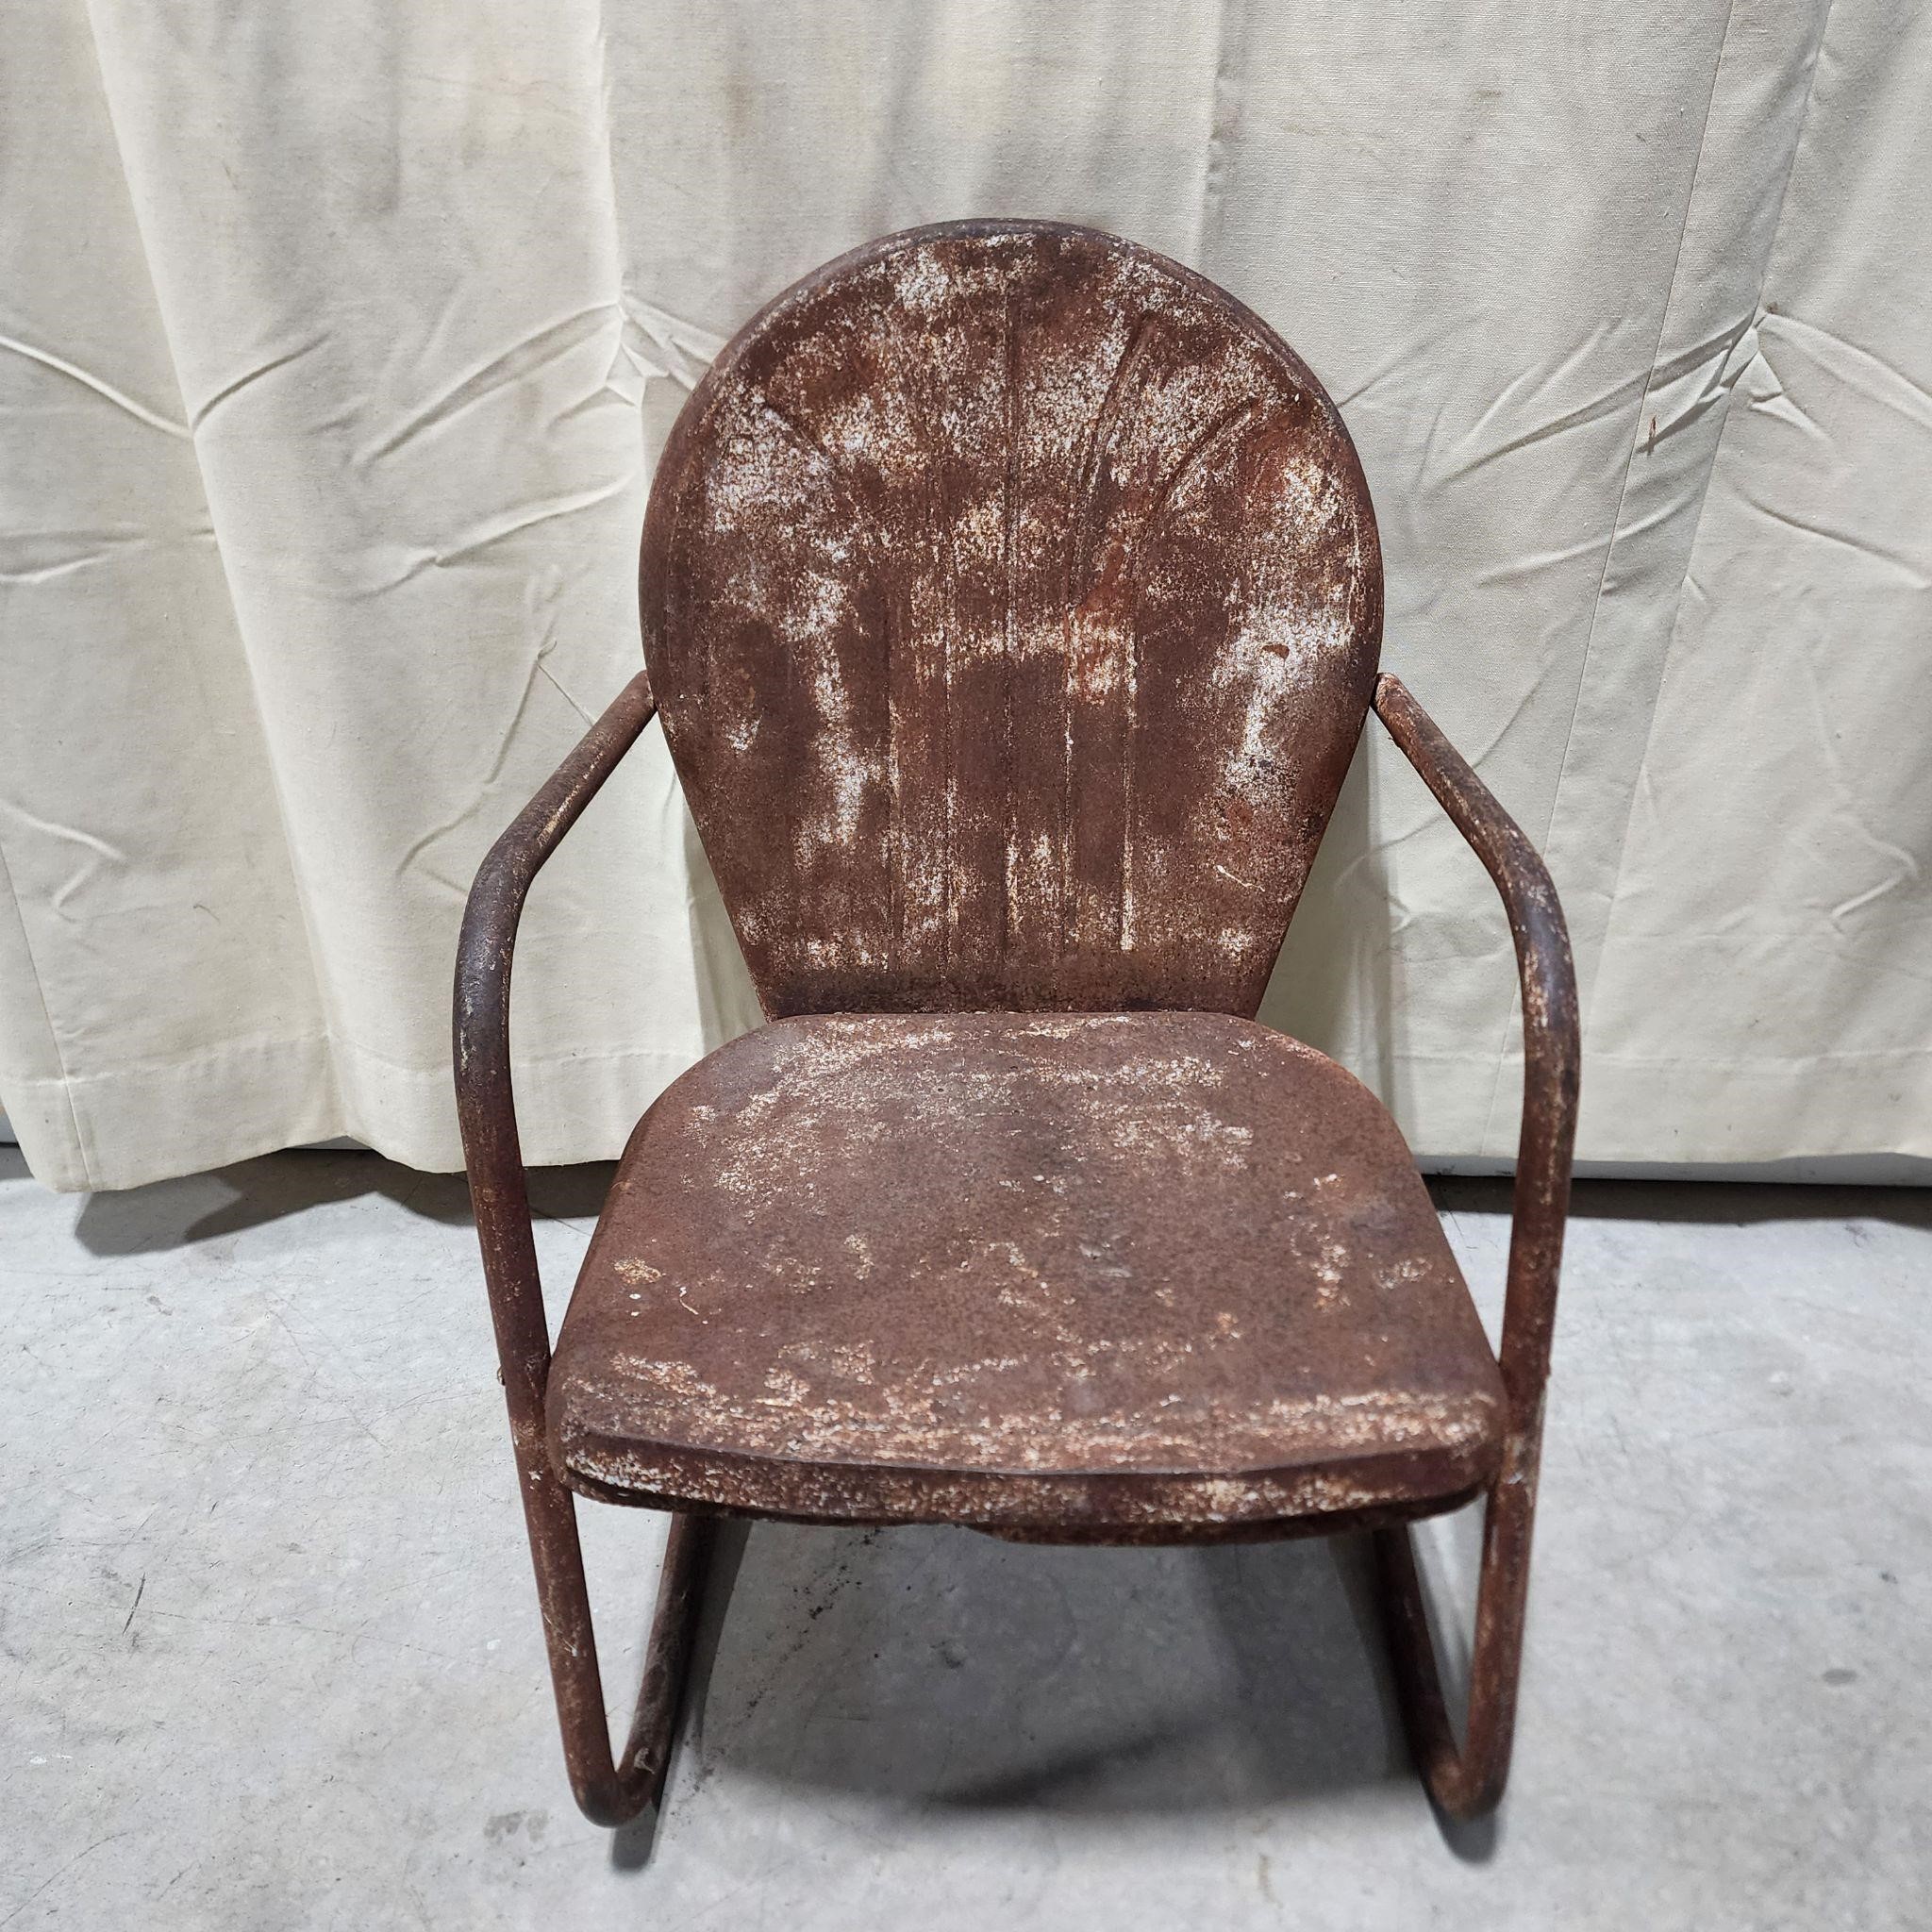 Rusty outdoor chair